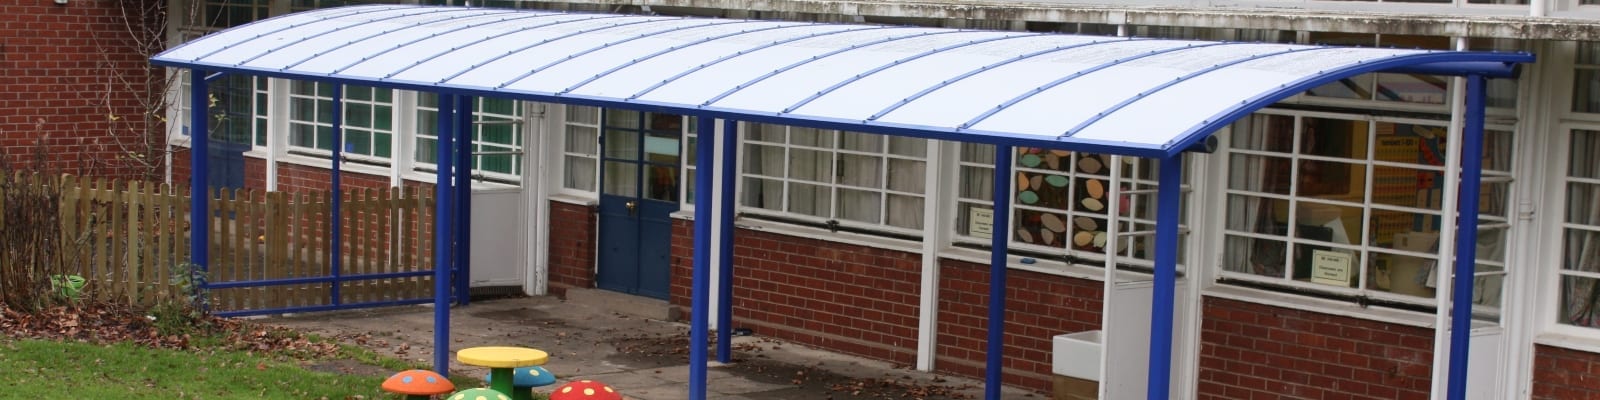 Crowmoor Primary School Canopy